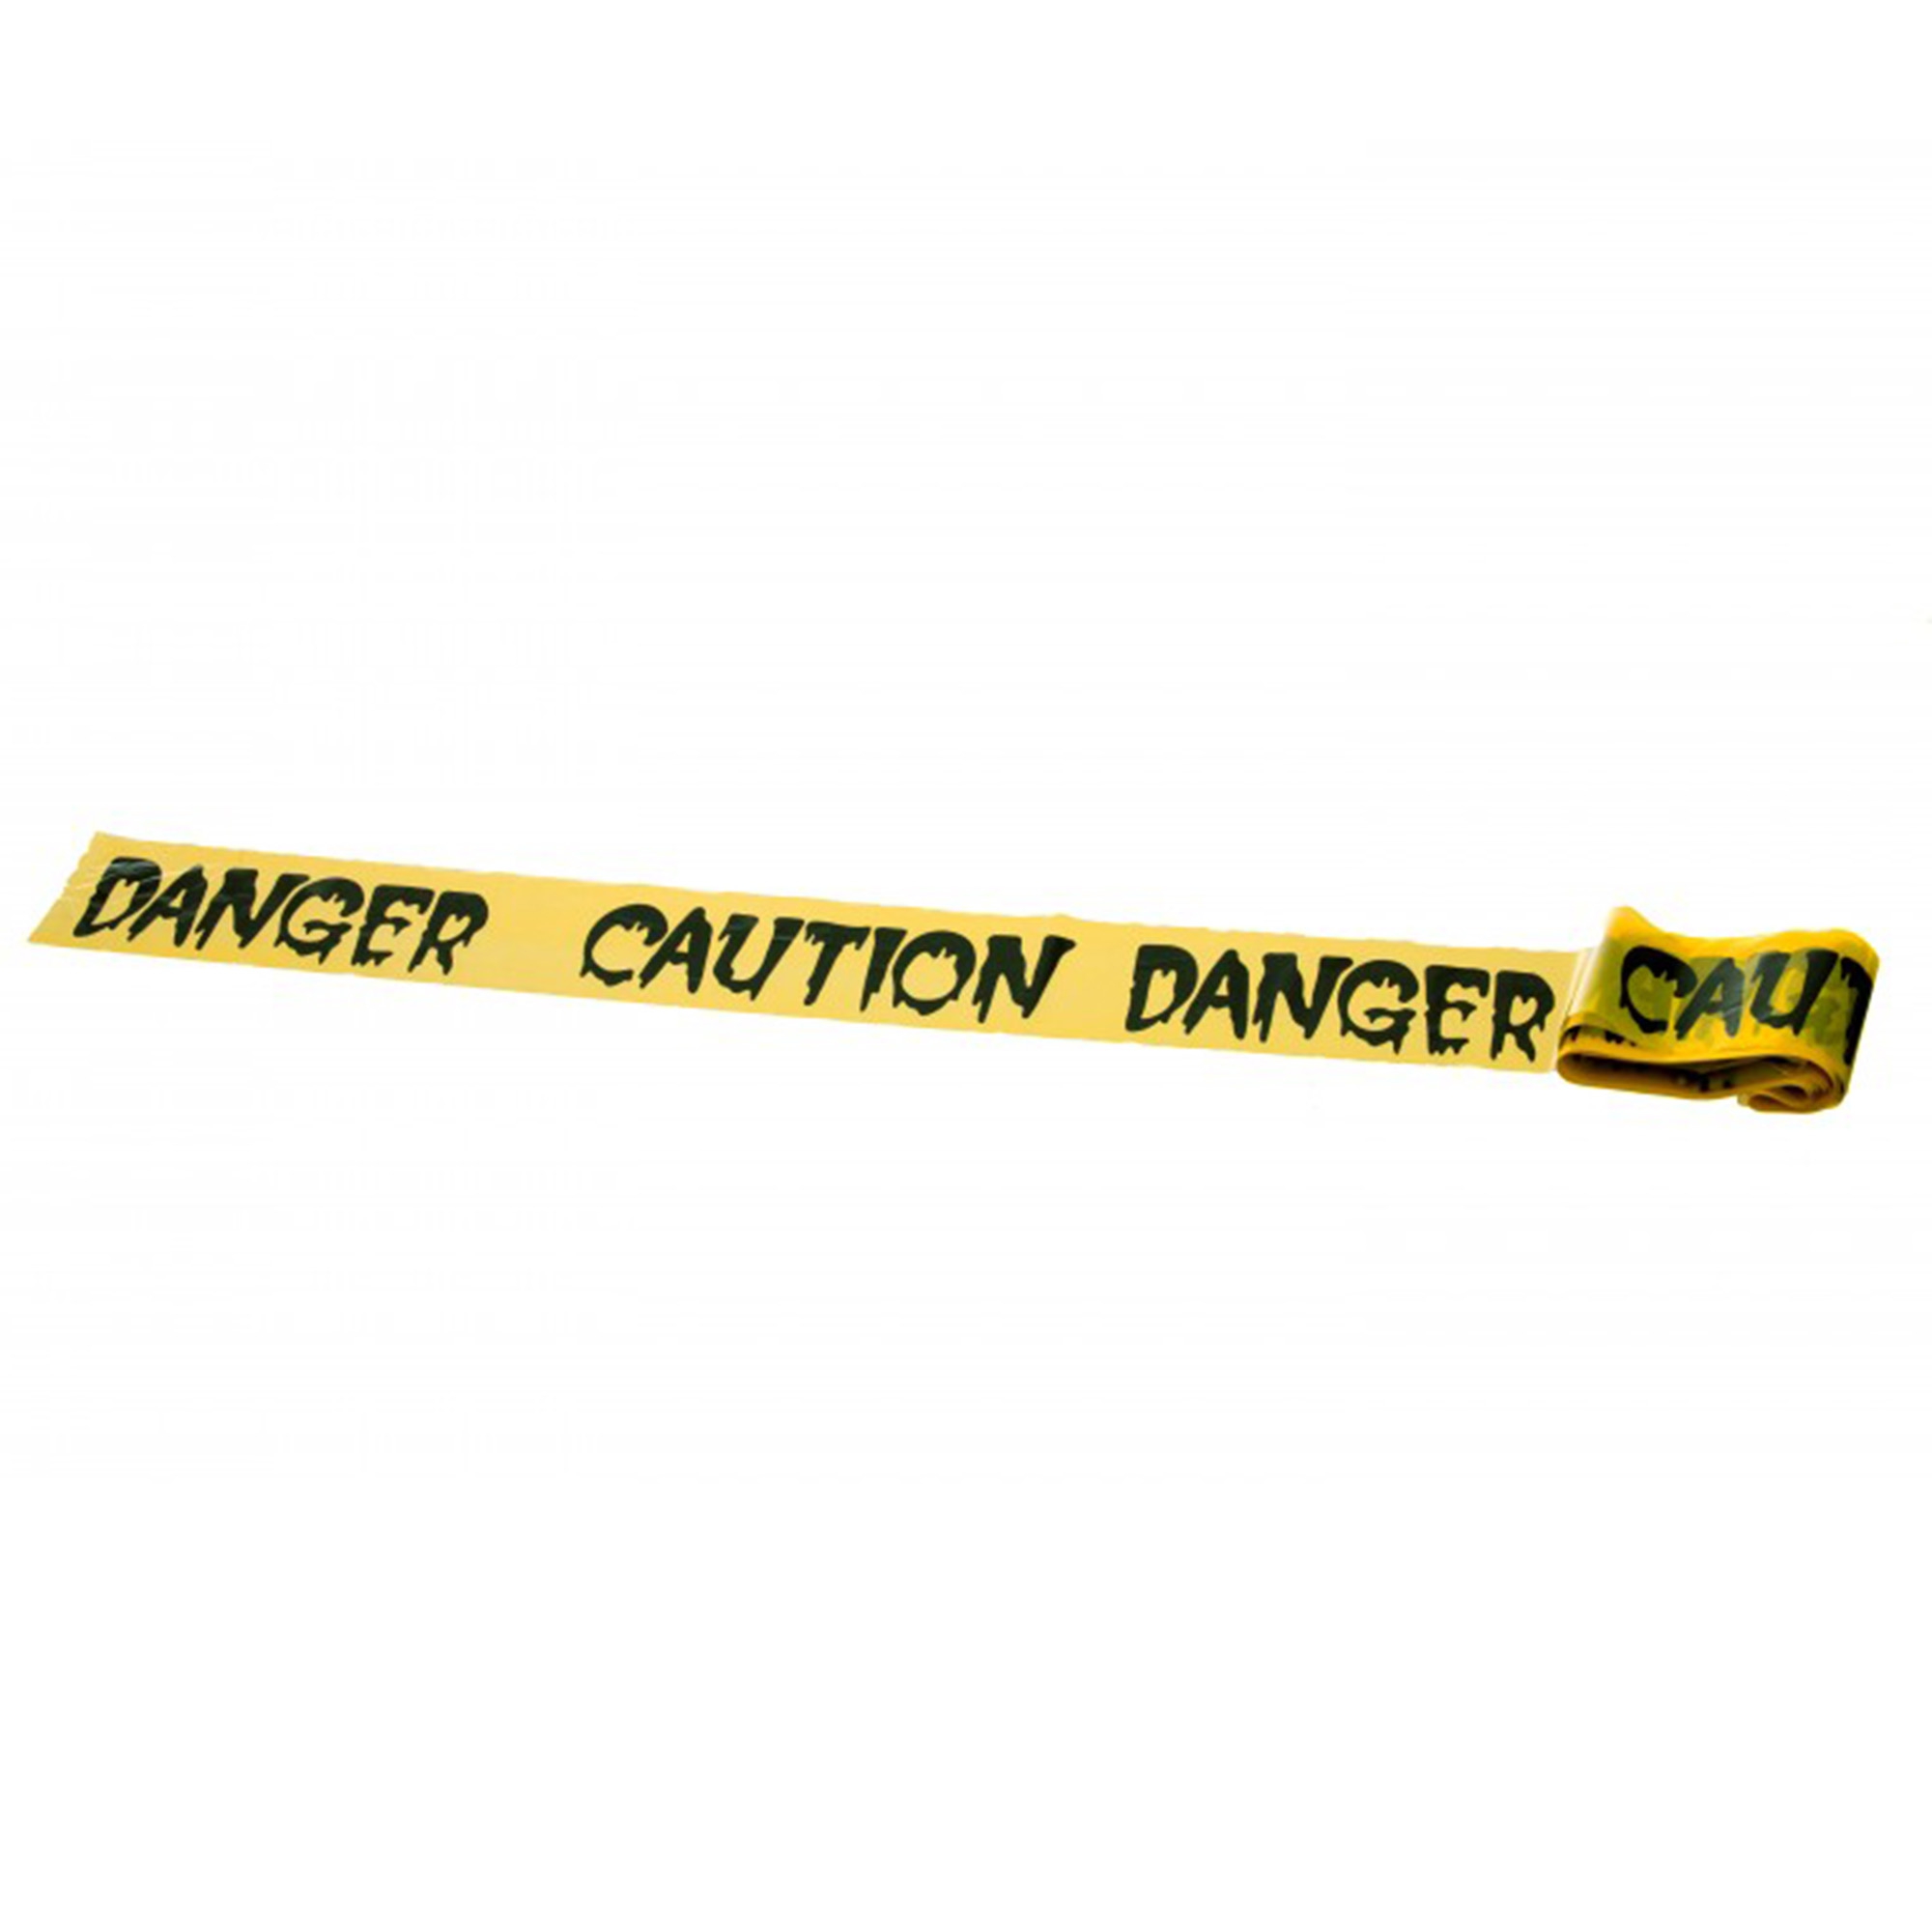 Banner "Caution Danger"